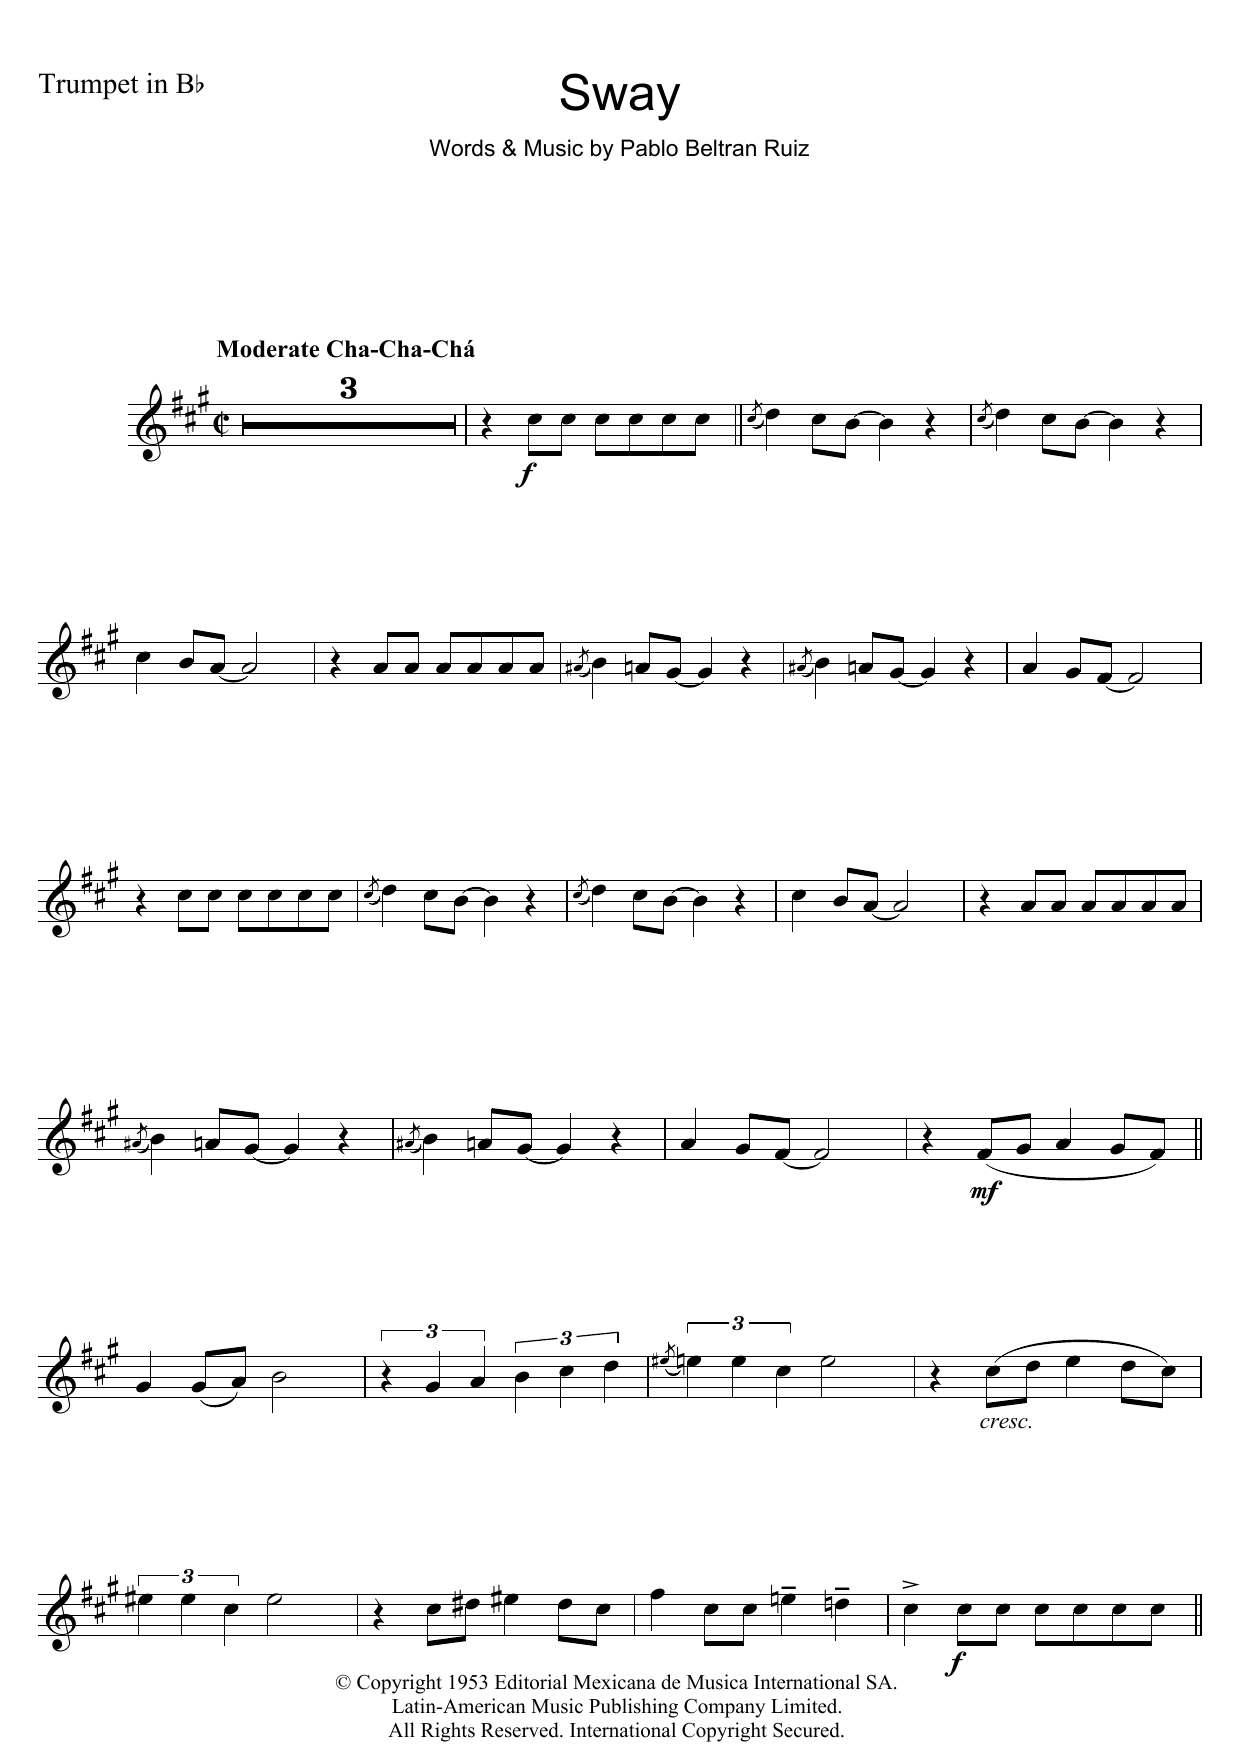 Pablo Beltran Ruiz Sway (Quien Sera) Sheet Music Notes & Chords for Piano, Vocal & Guitar (Right-Hand Melody) - Download or Print PDF